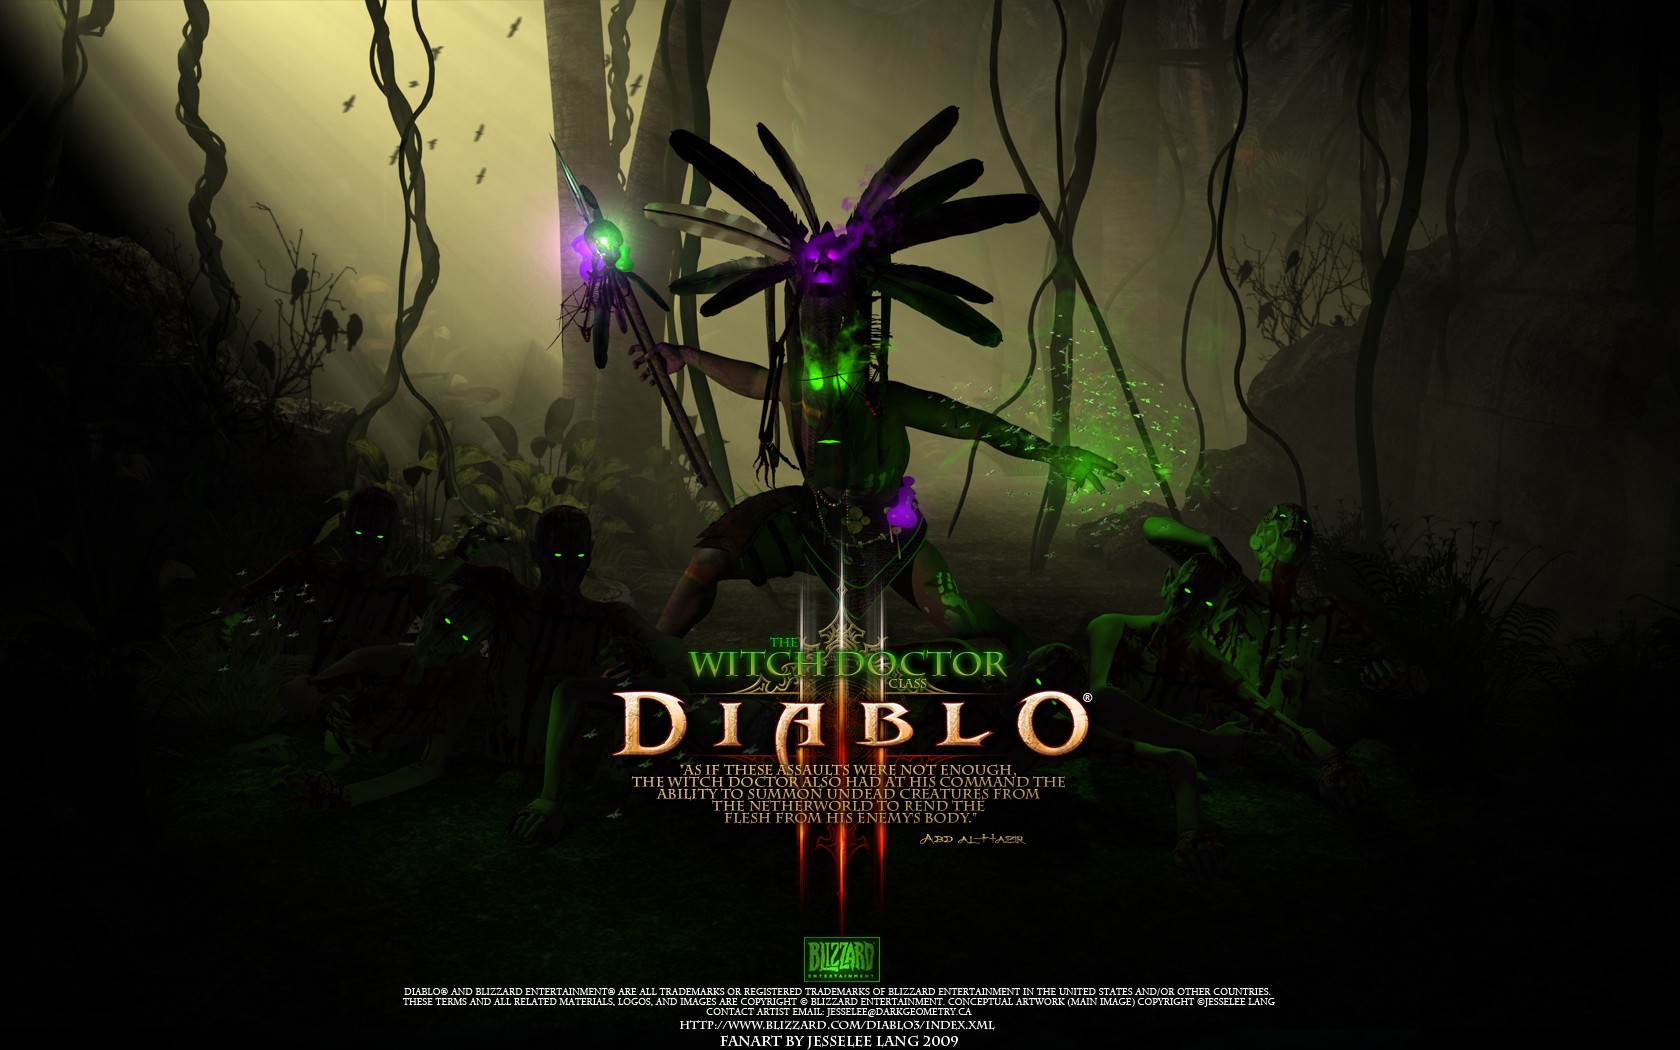 General 1680x1050 Diablo III video games Blizzard Entertainment PC gaming fantasy art video game art 2009 (Year)